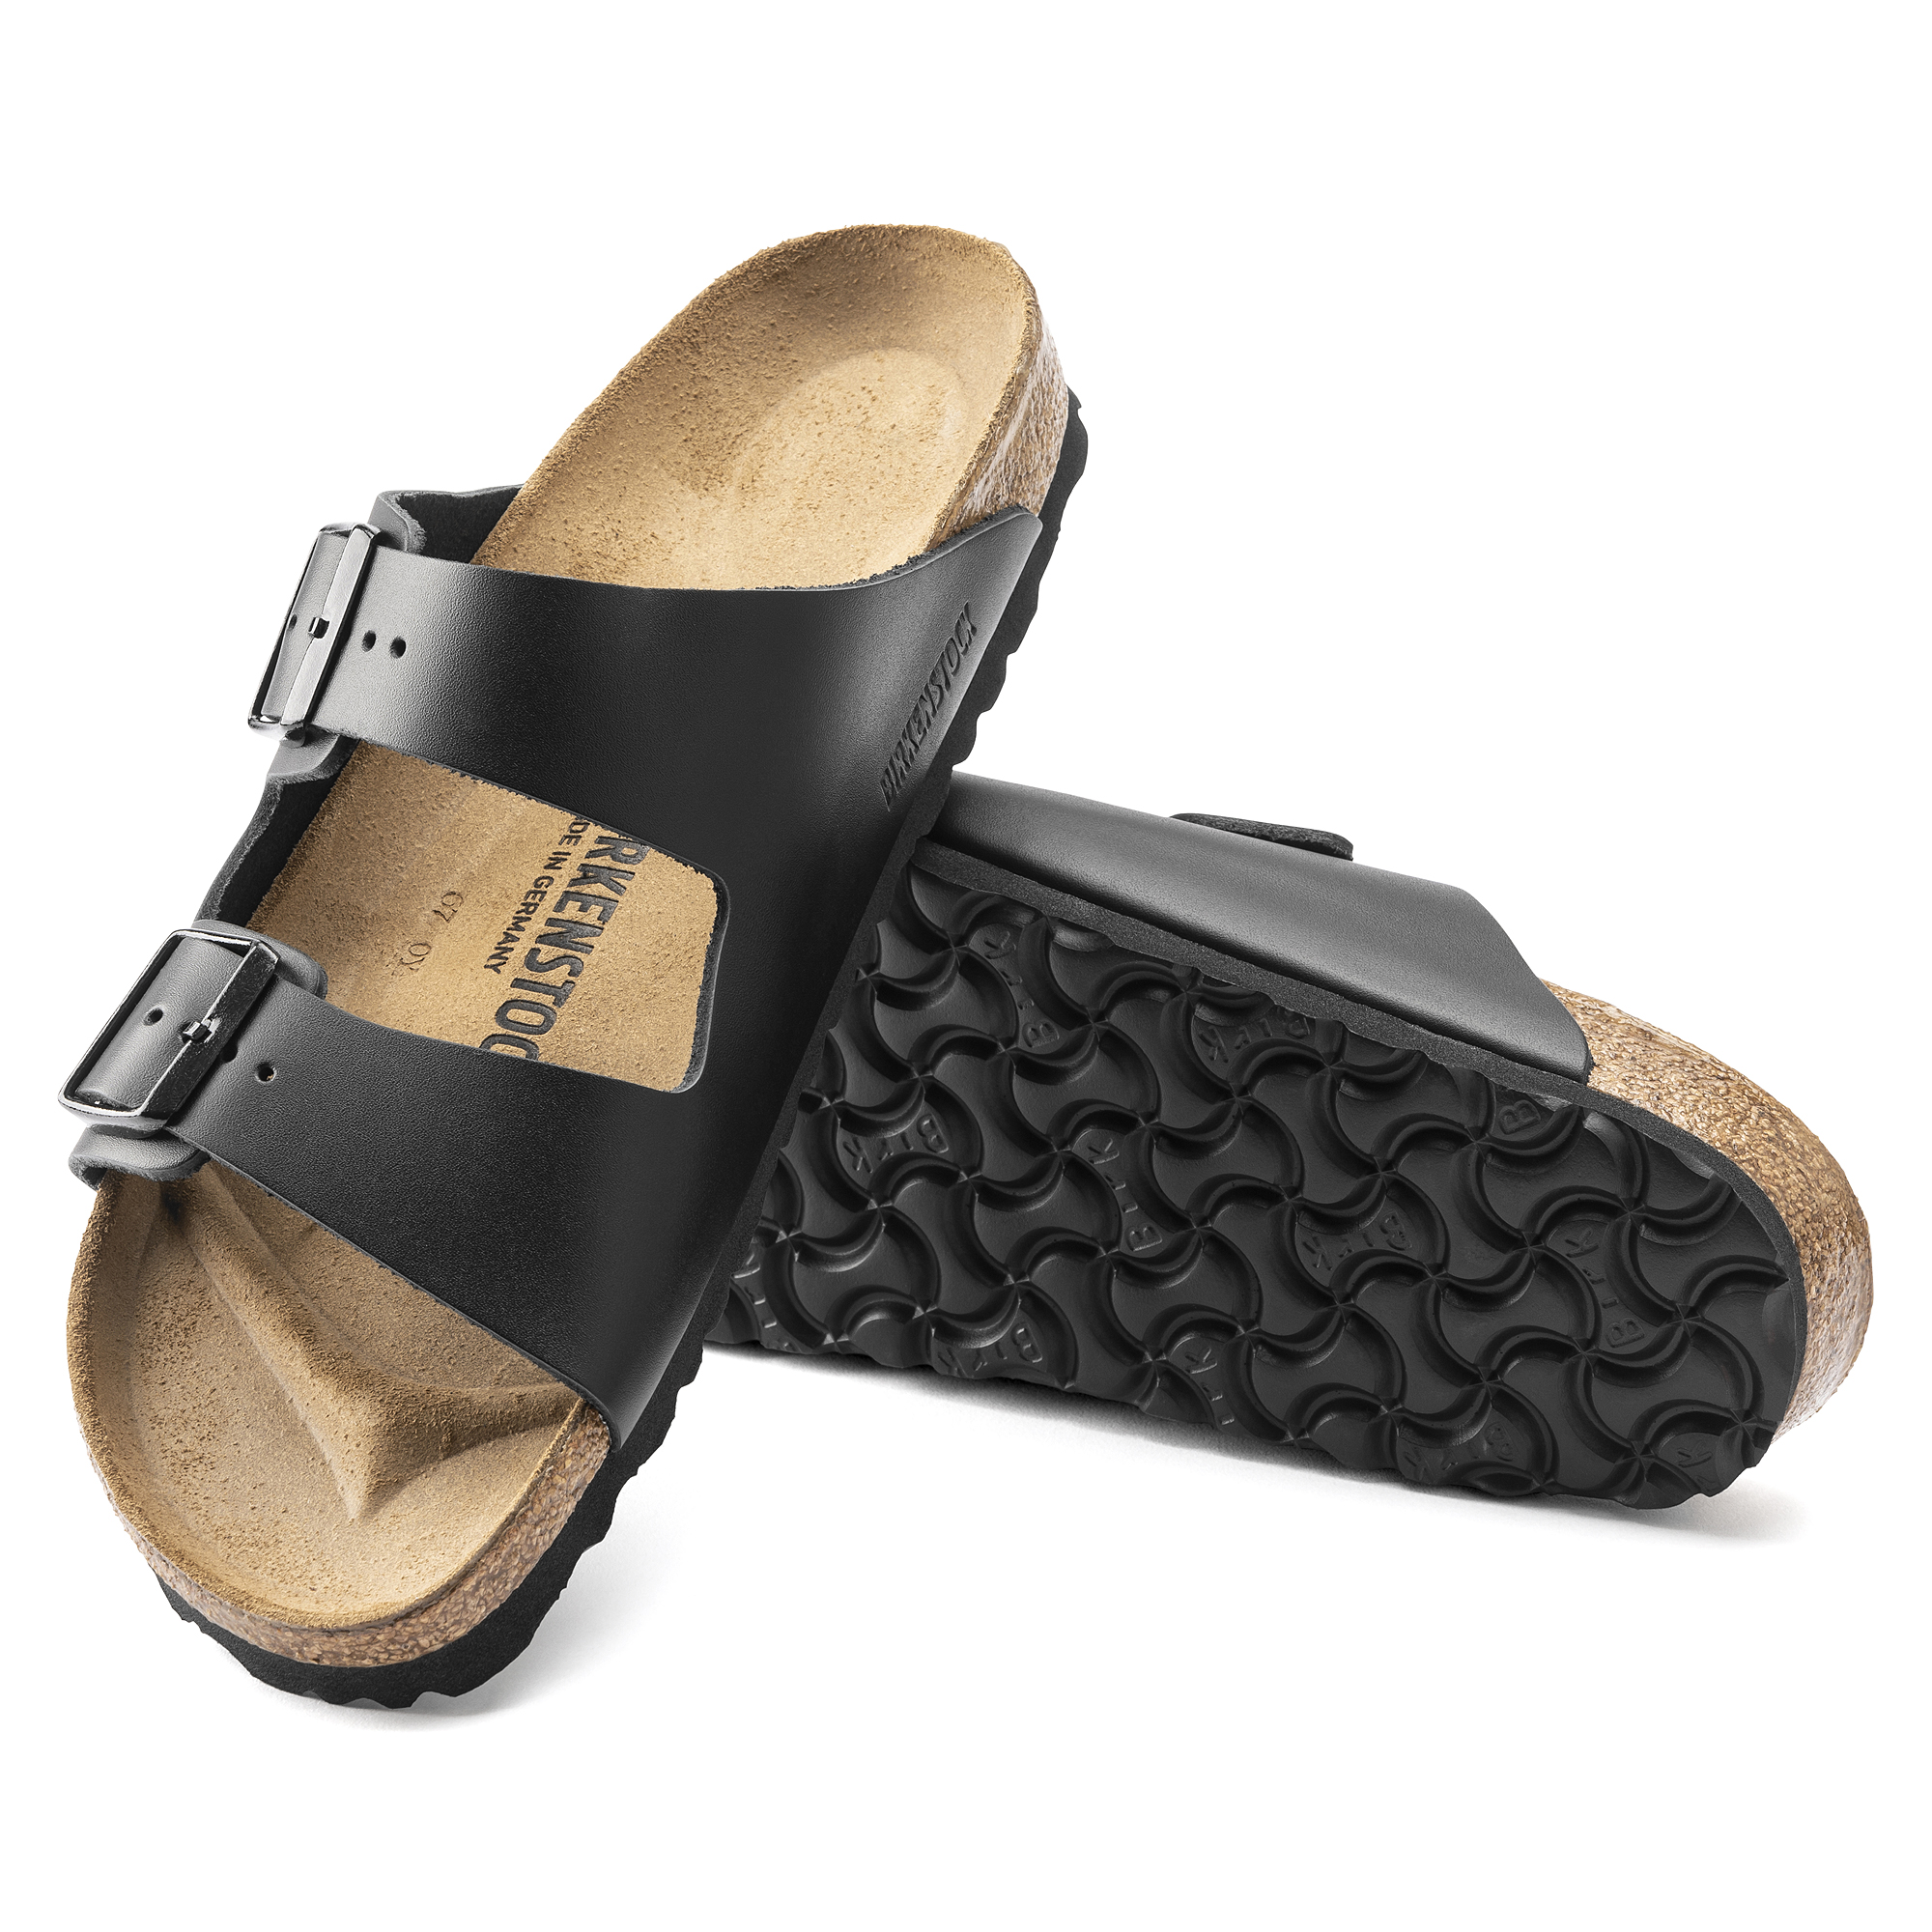 Leather sandal Birkenstock Black size 37 EU in Leather - 34326665